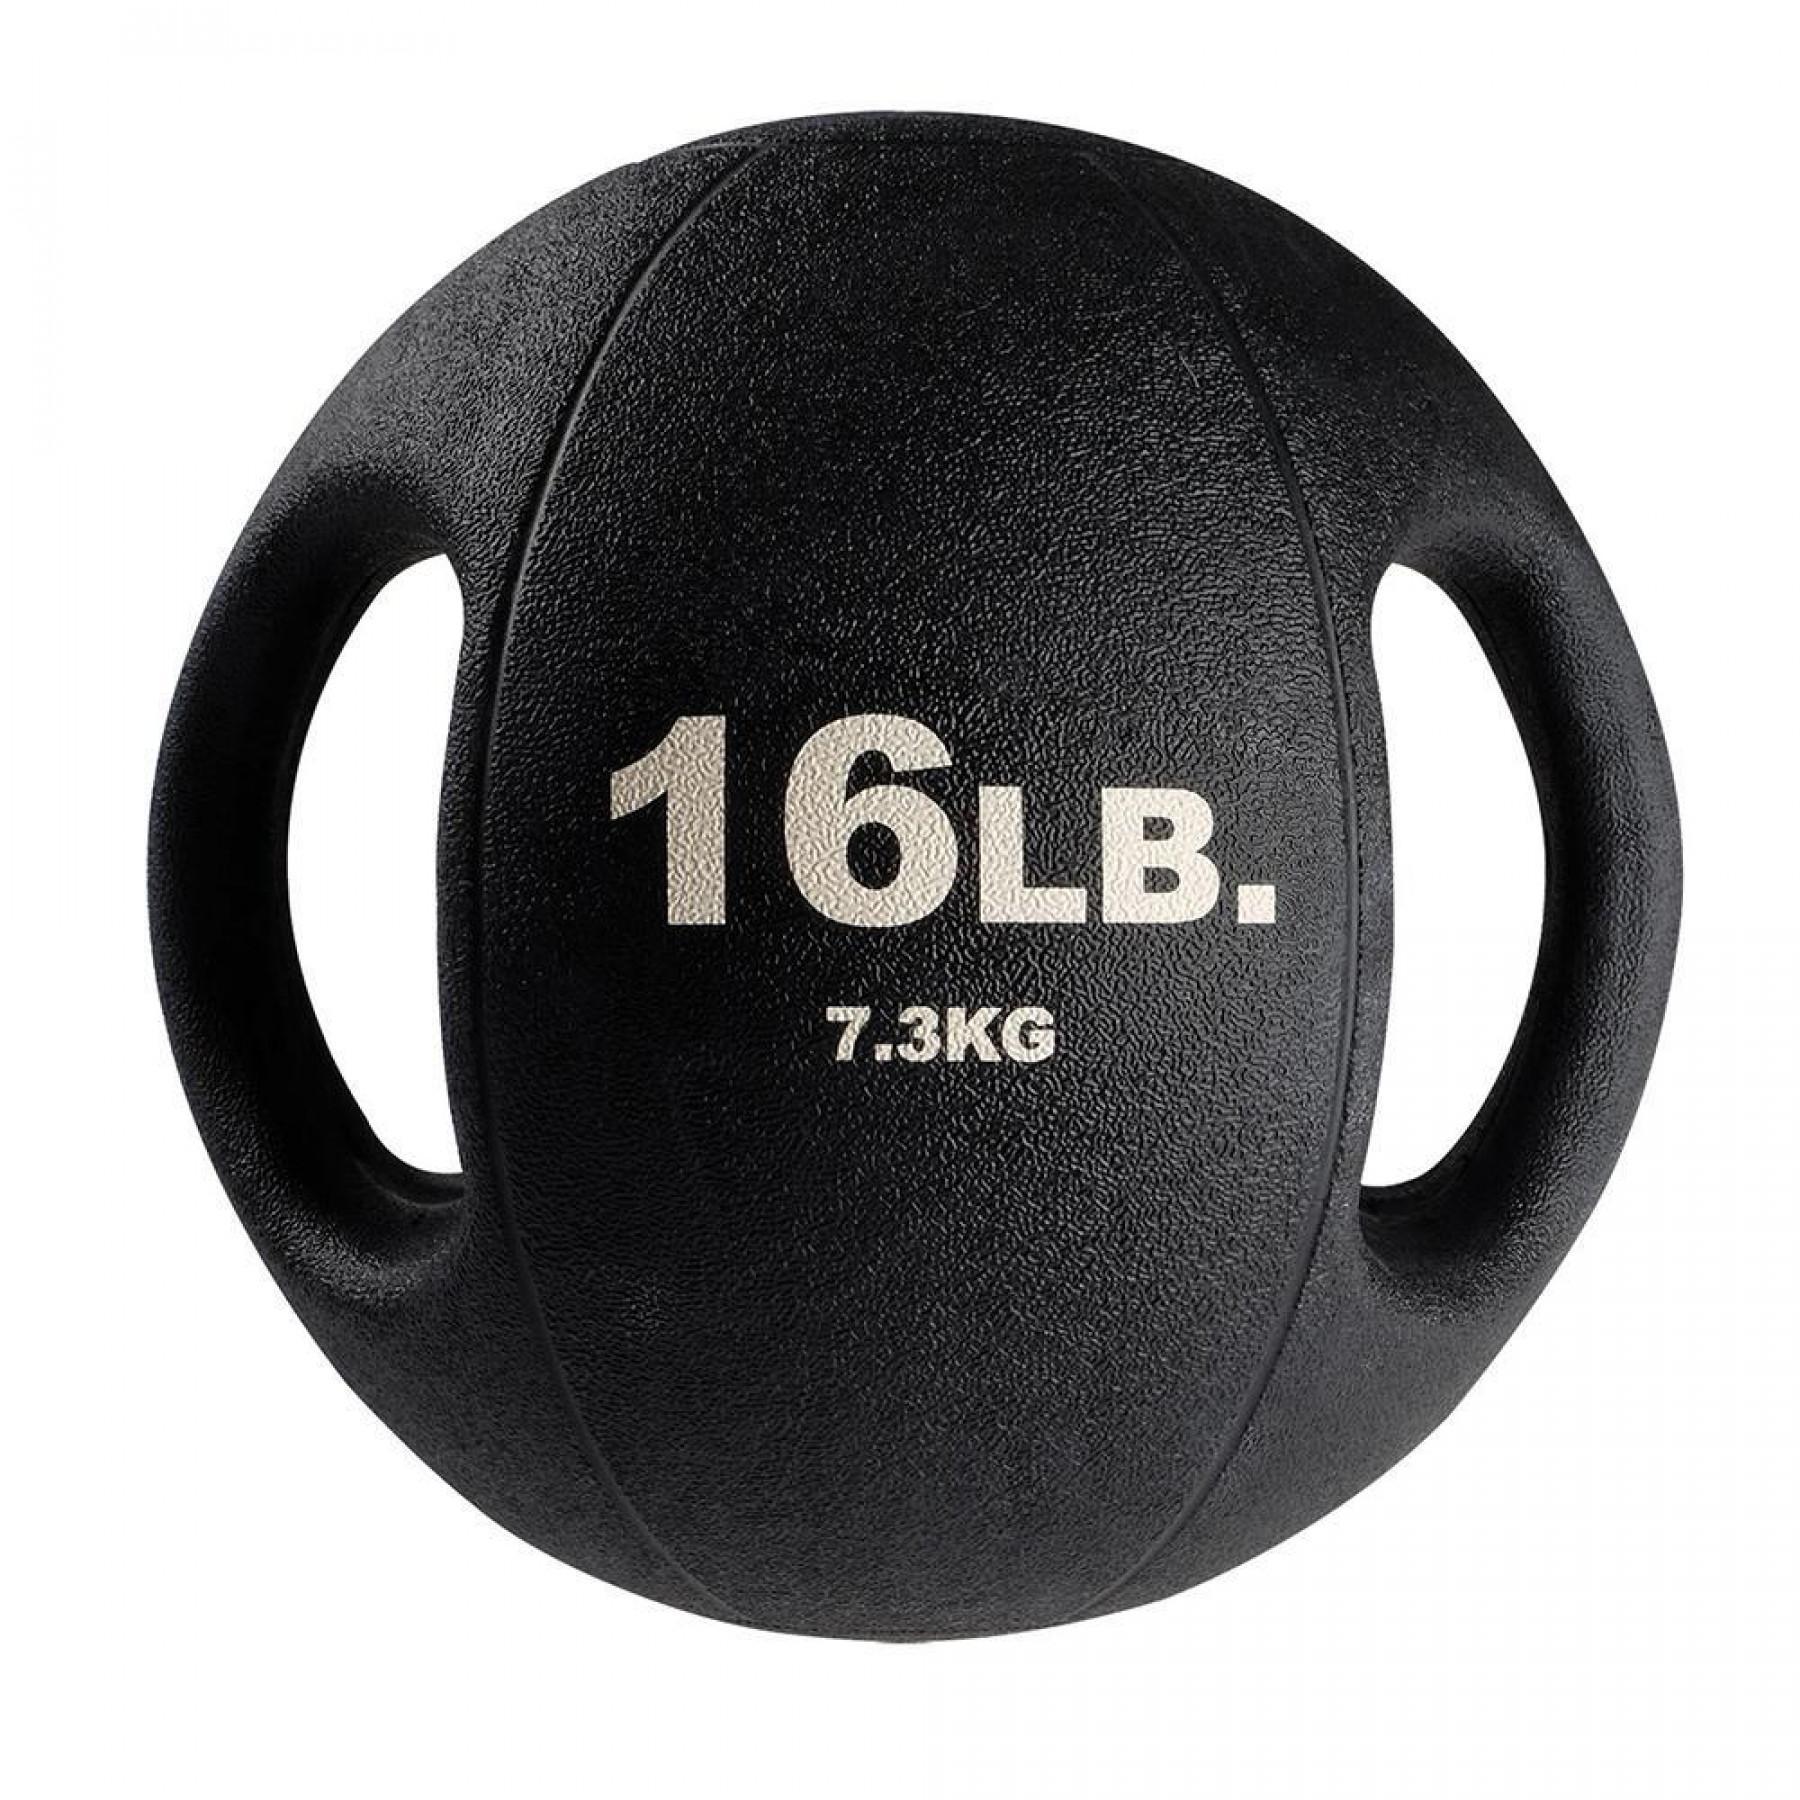 Medicine ball 2 handles 3.6 kg Body Solid